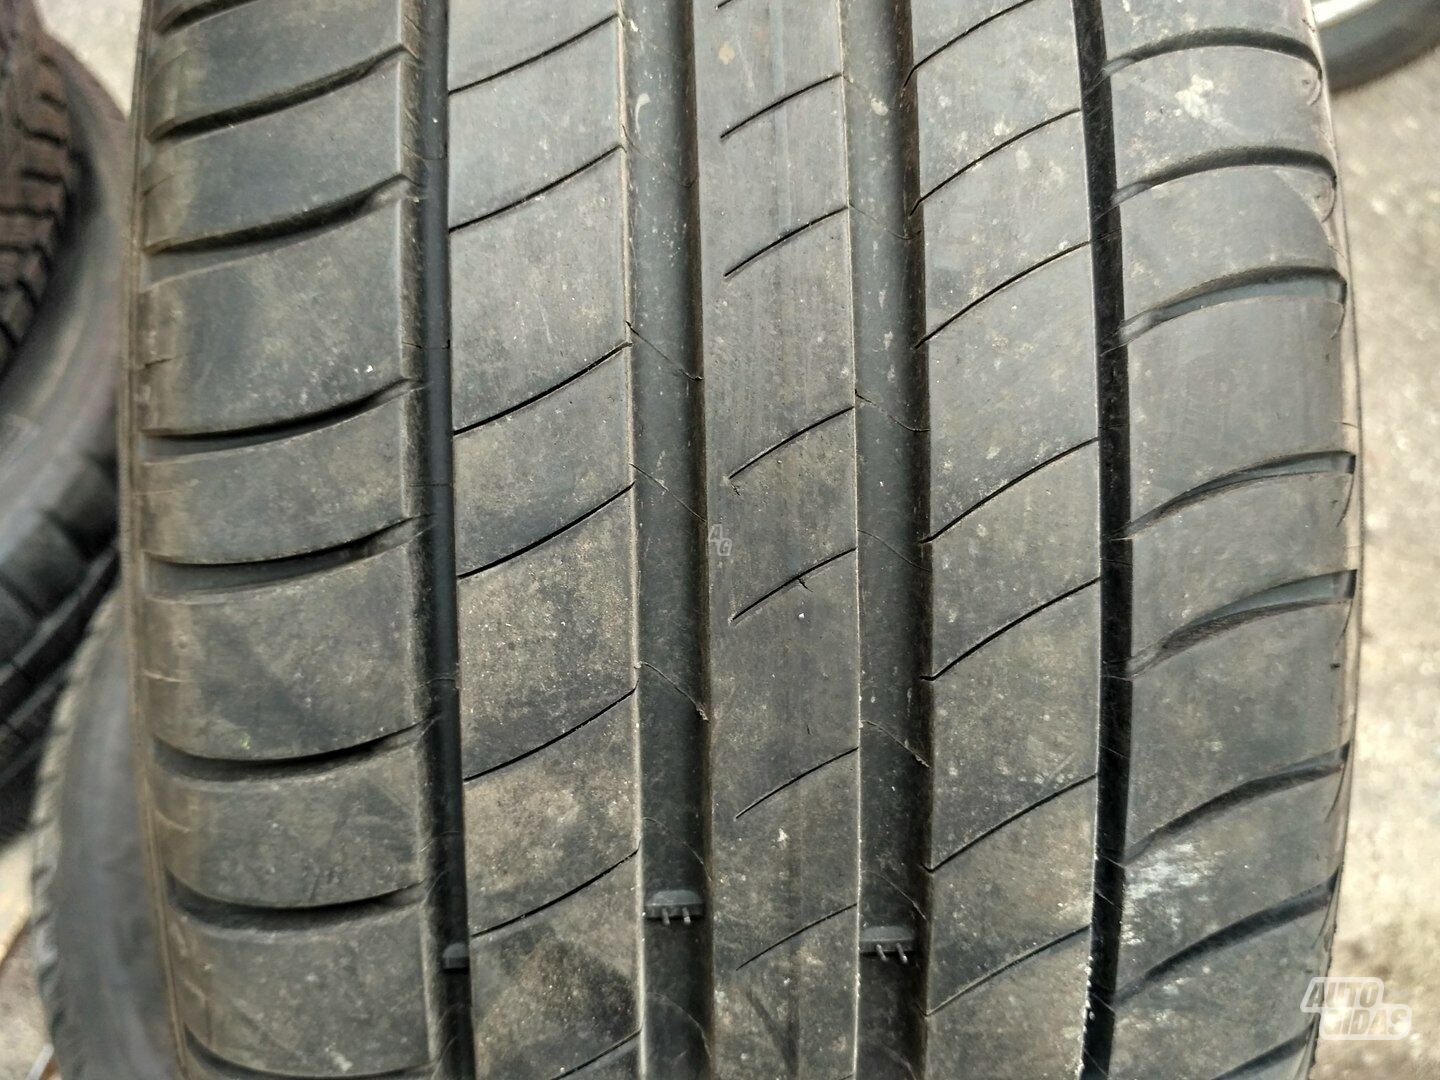 R16 summer tyres passanger car